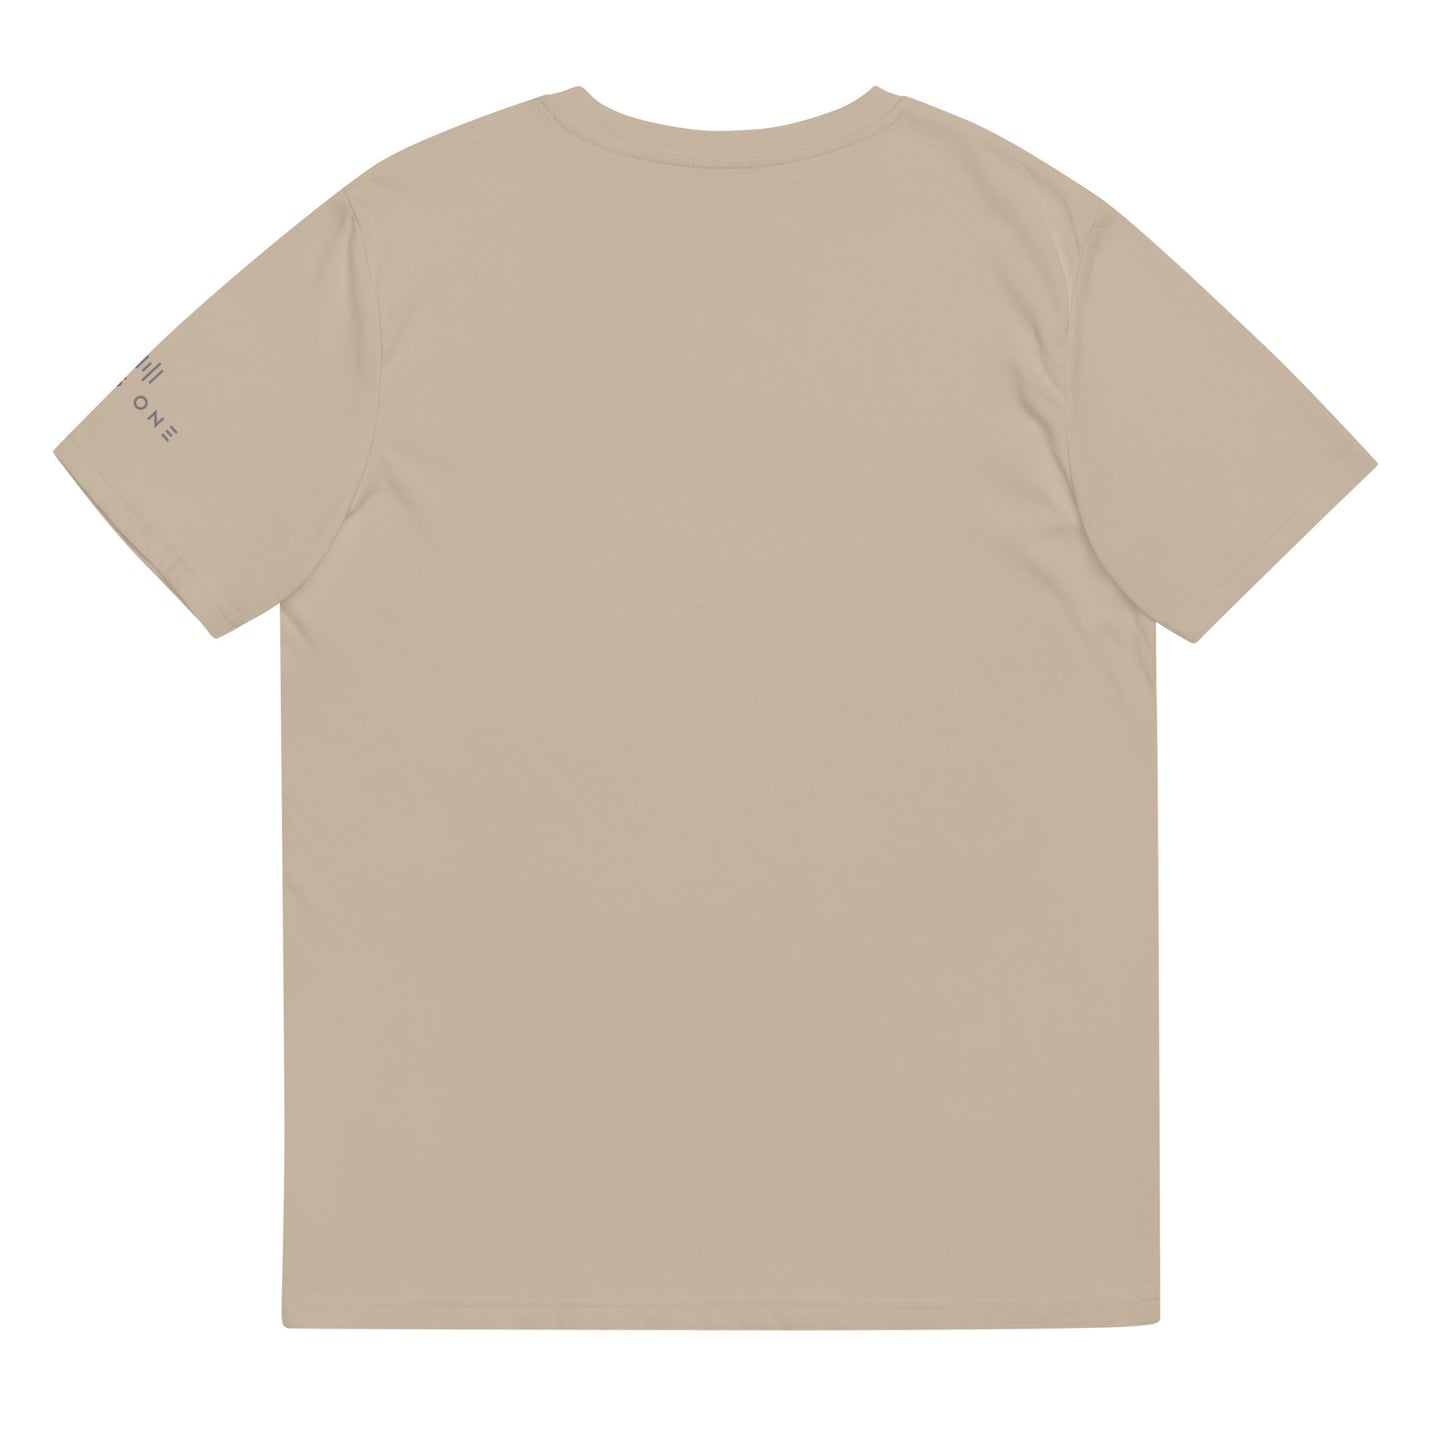 SK8 (v1) Unisex organic cotton t-shirt